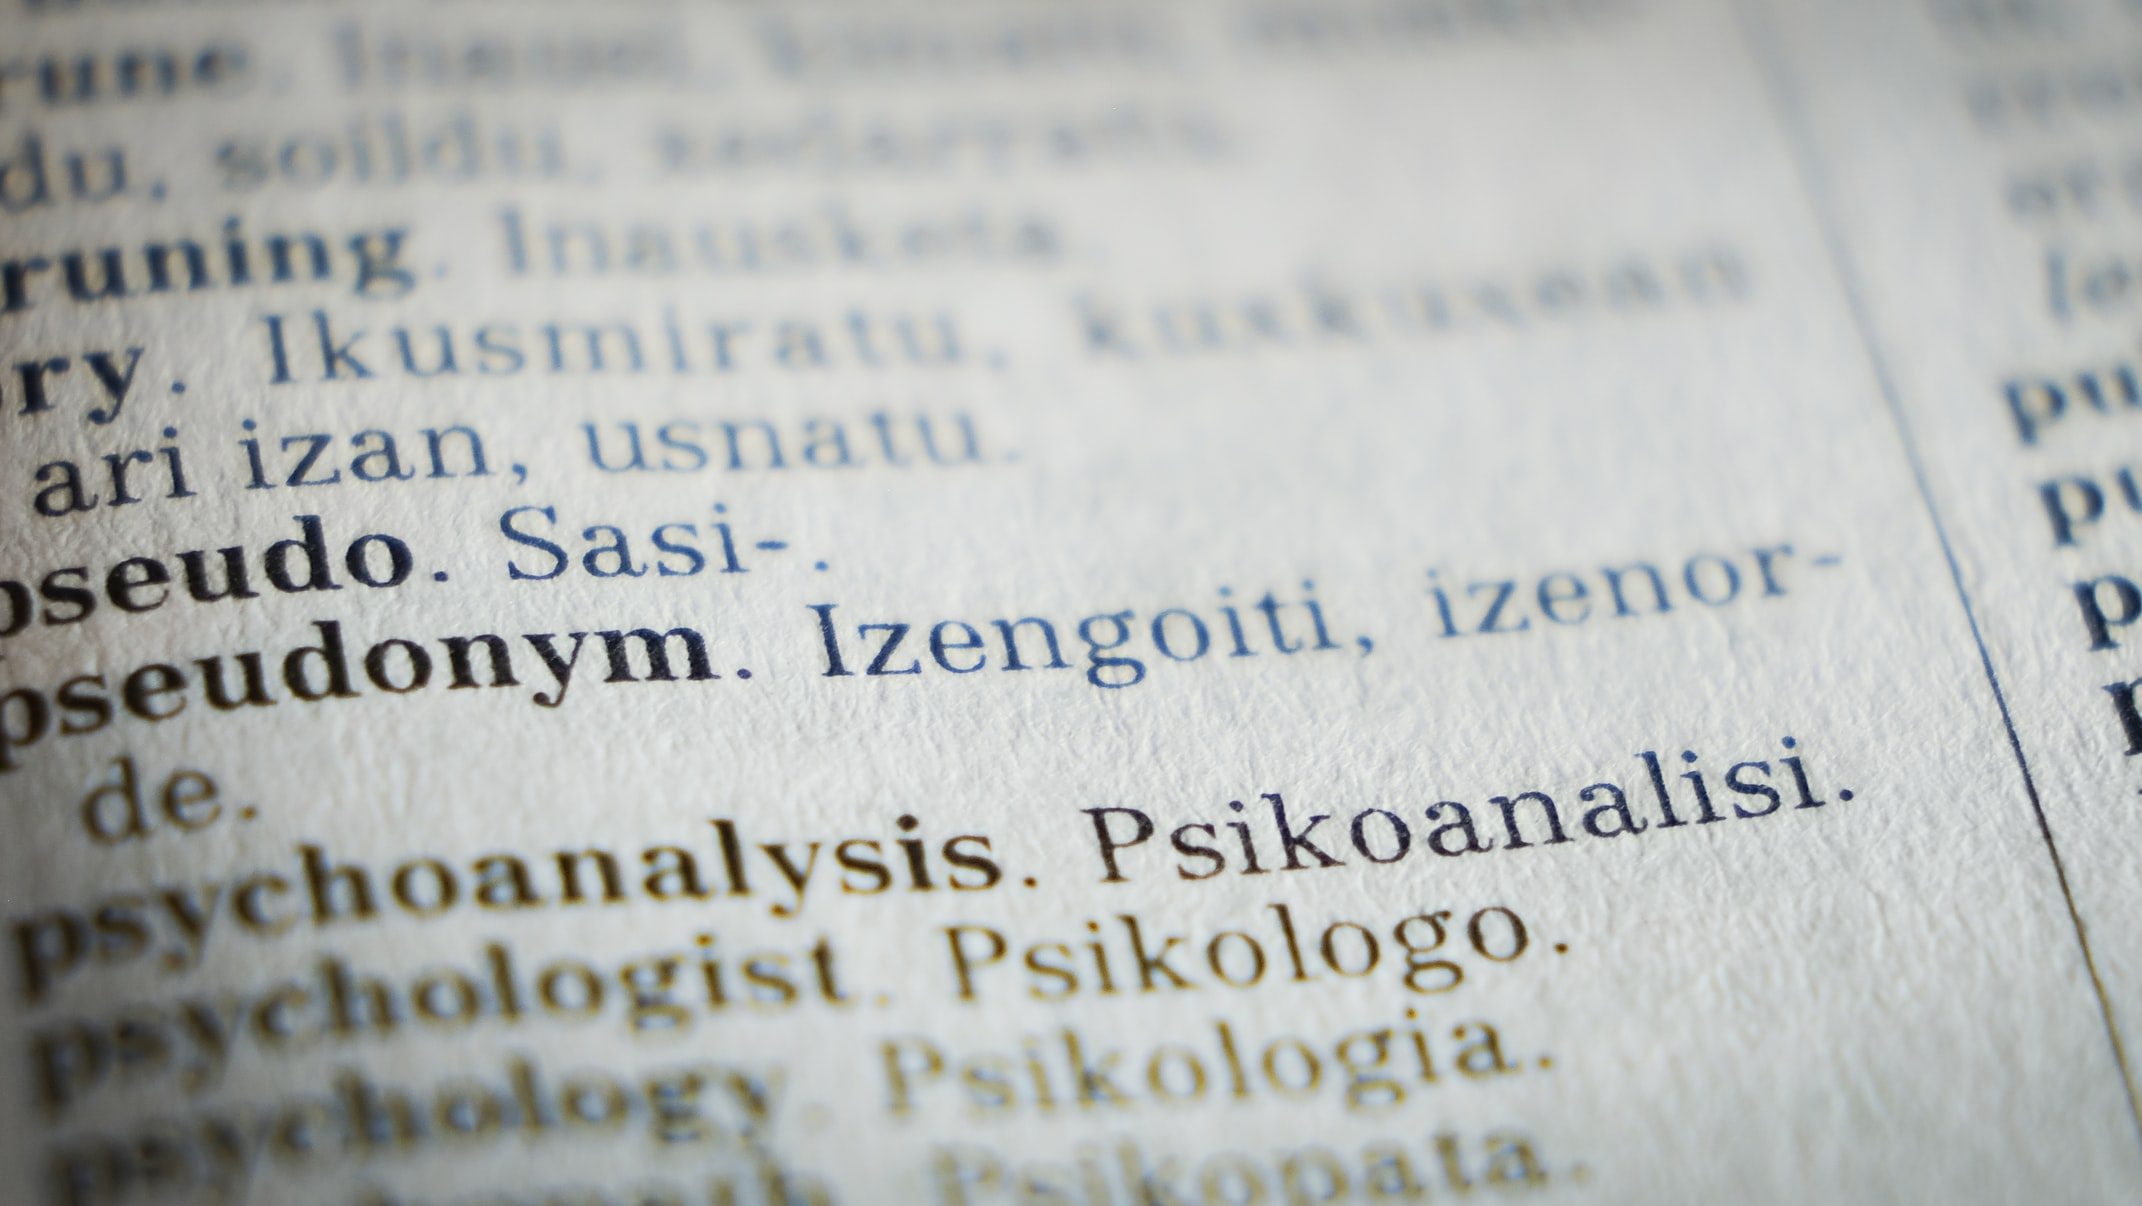 An English-Basque dictionary